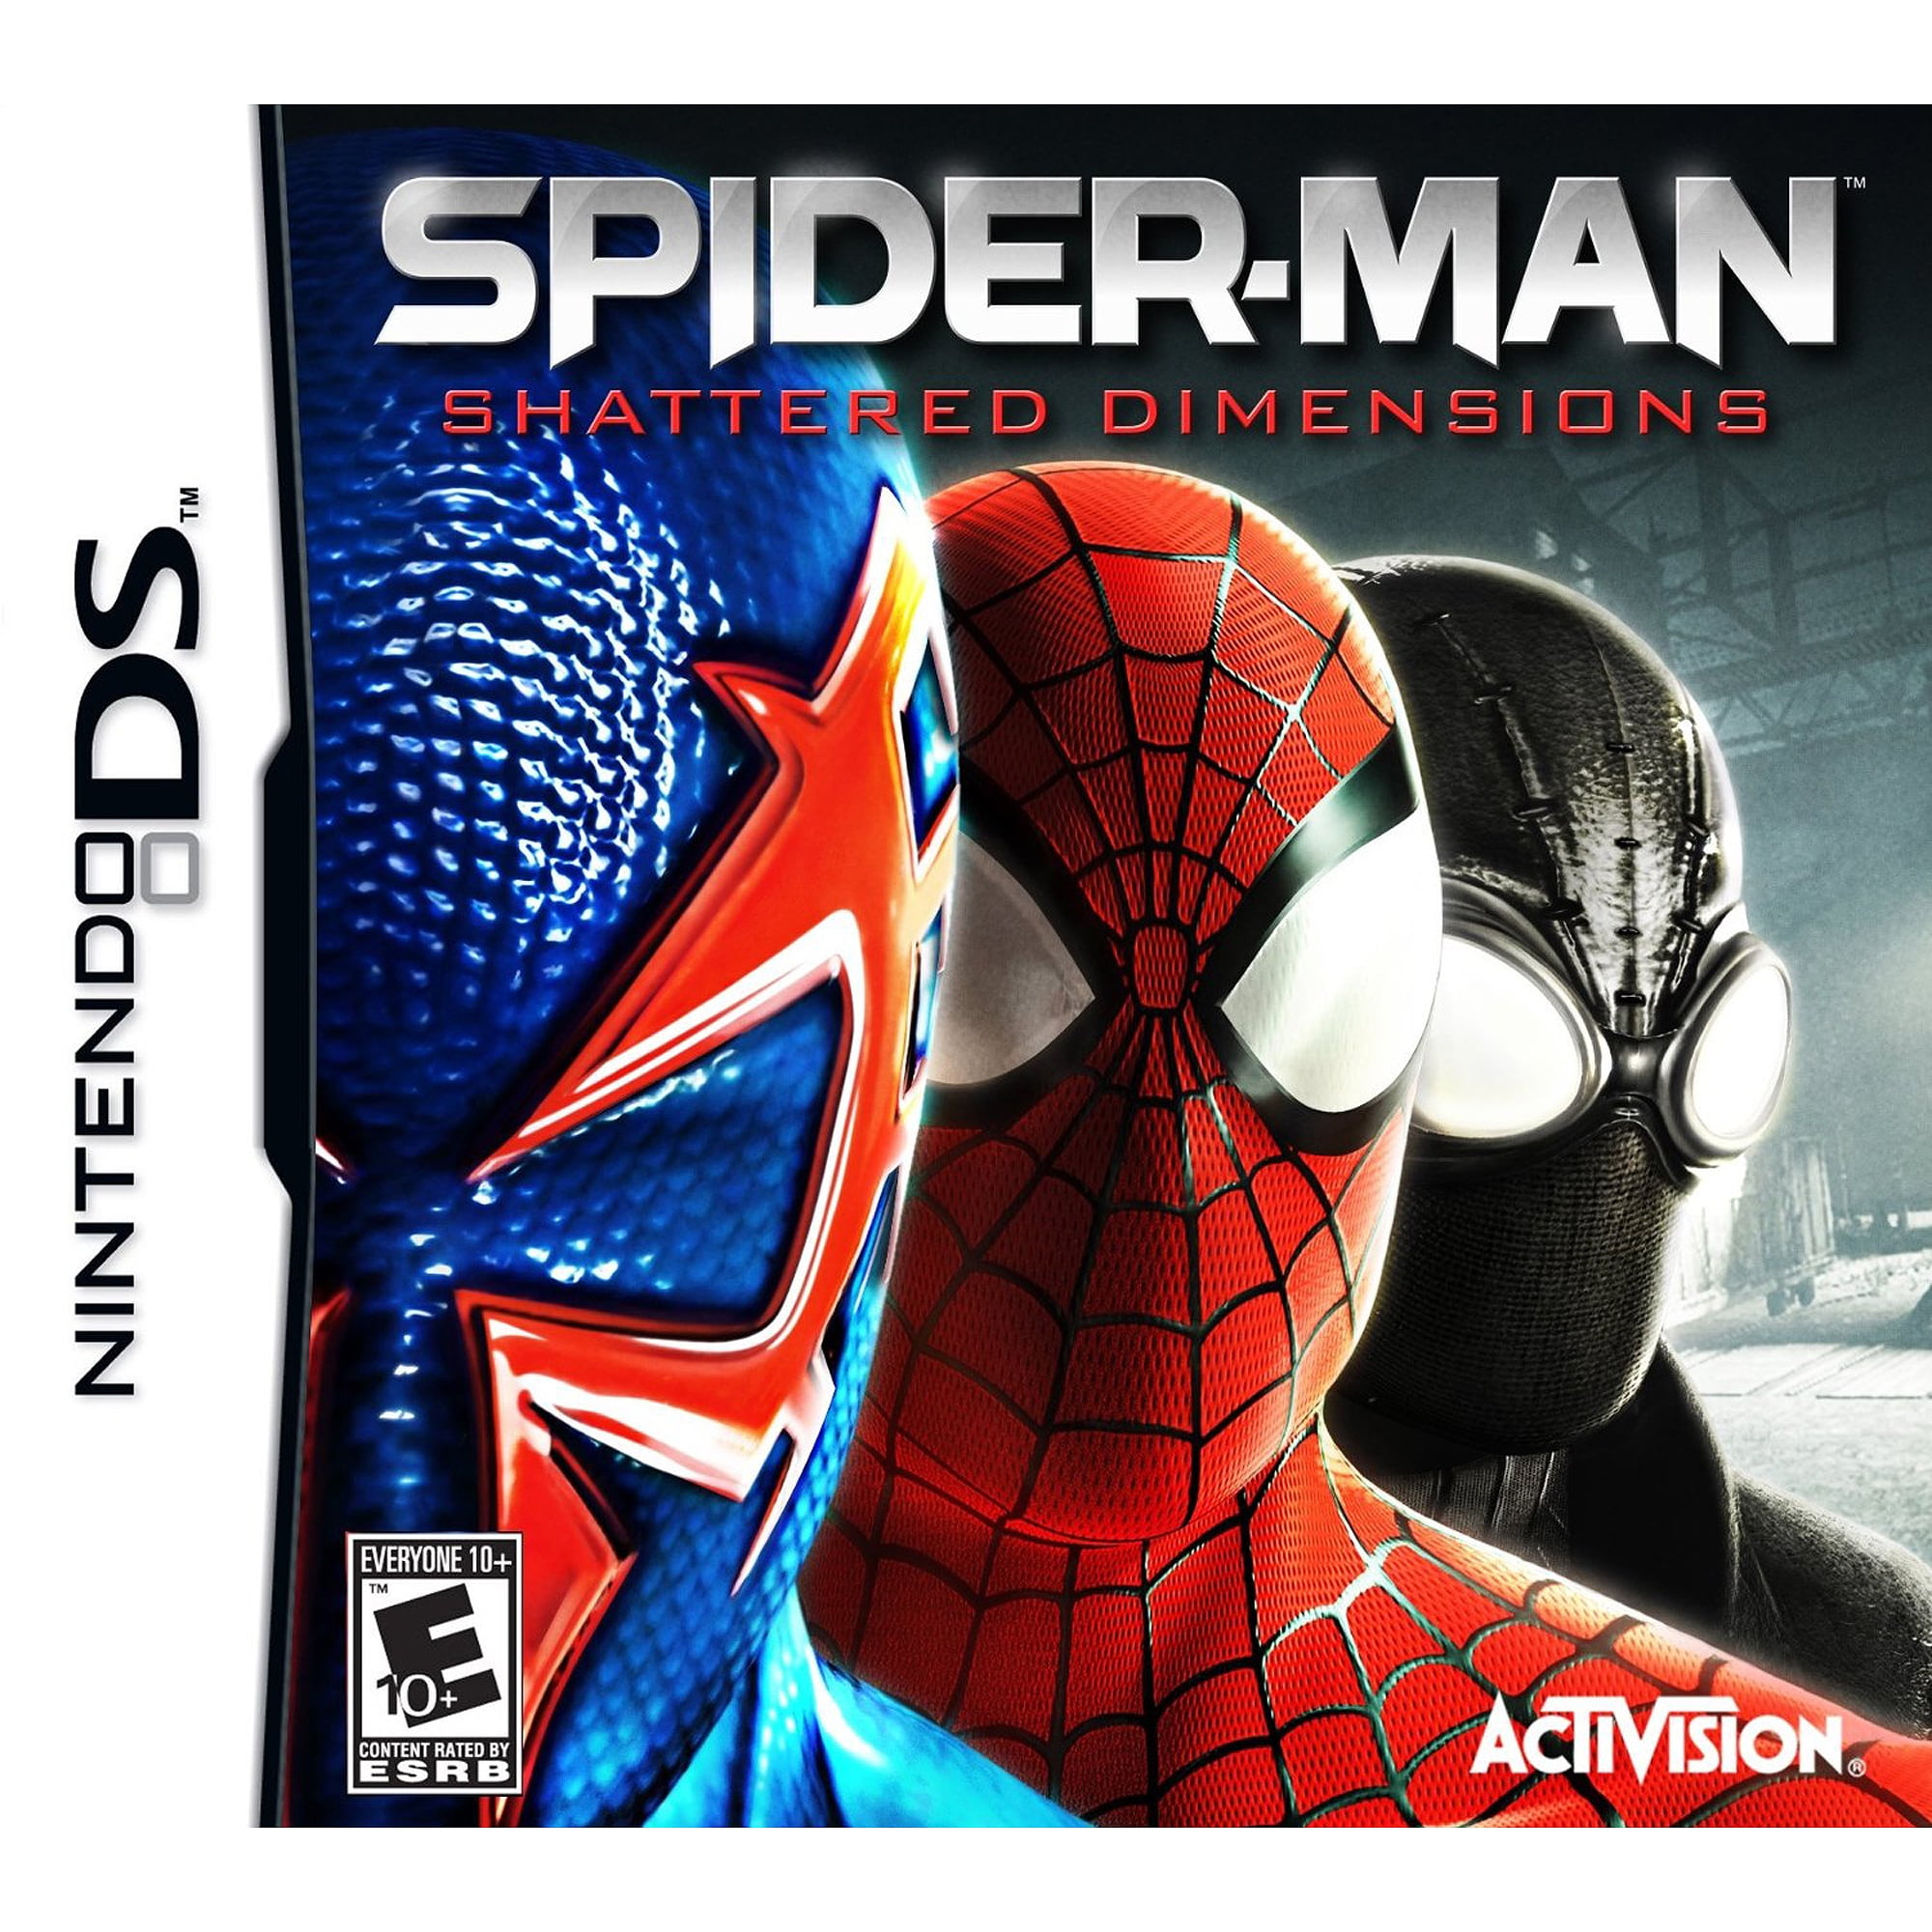 Человек паук на Нинтендо ДС. Spider man Shattered Dimensions Nintendo DS. Spider man 3 Nintendo DS. Spider man Nintendo DS обложка.